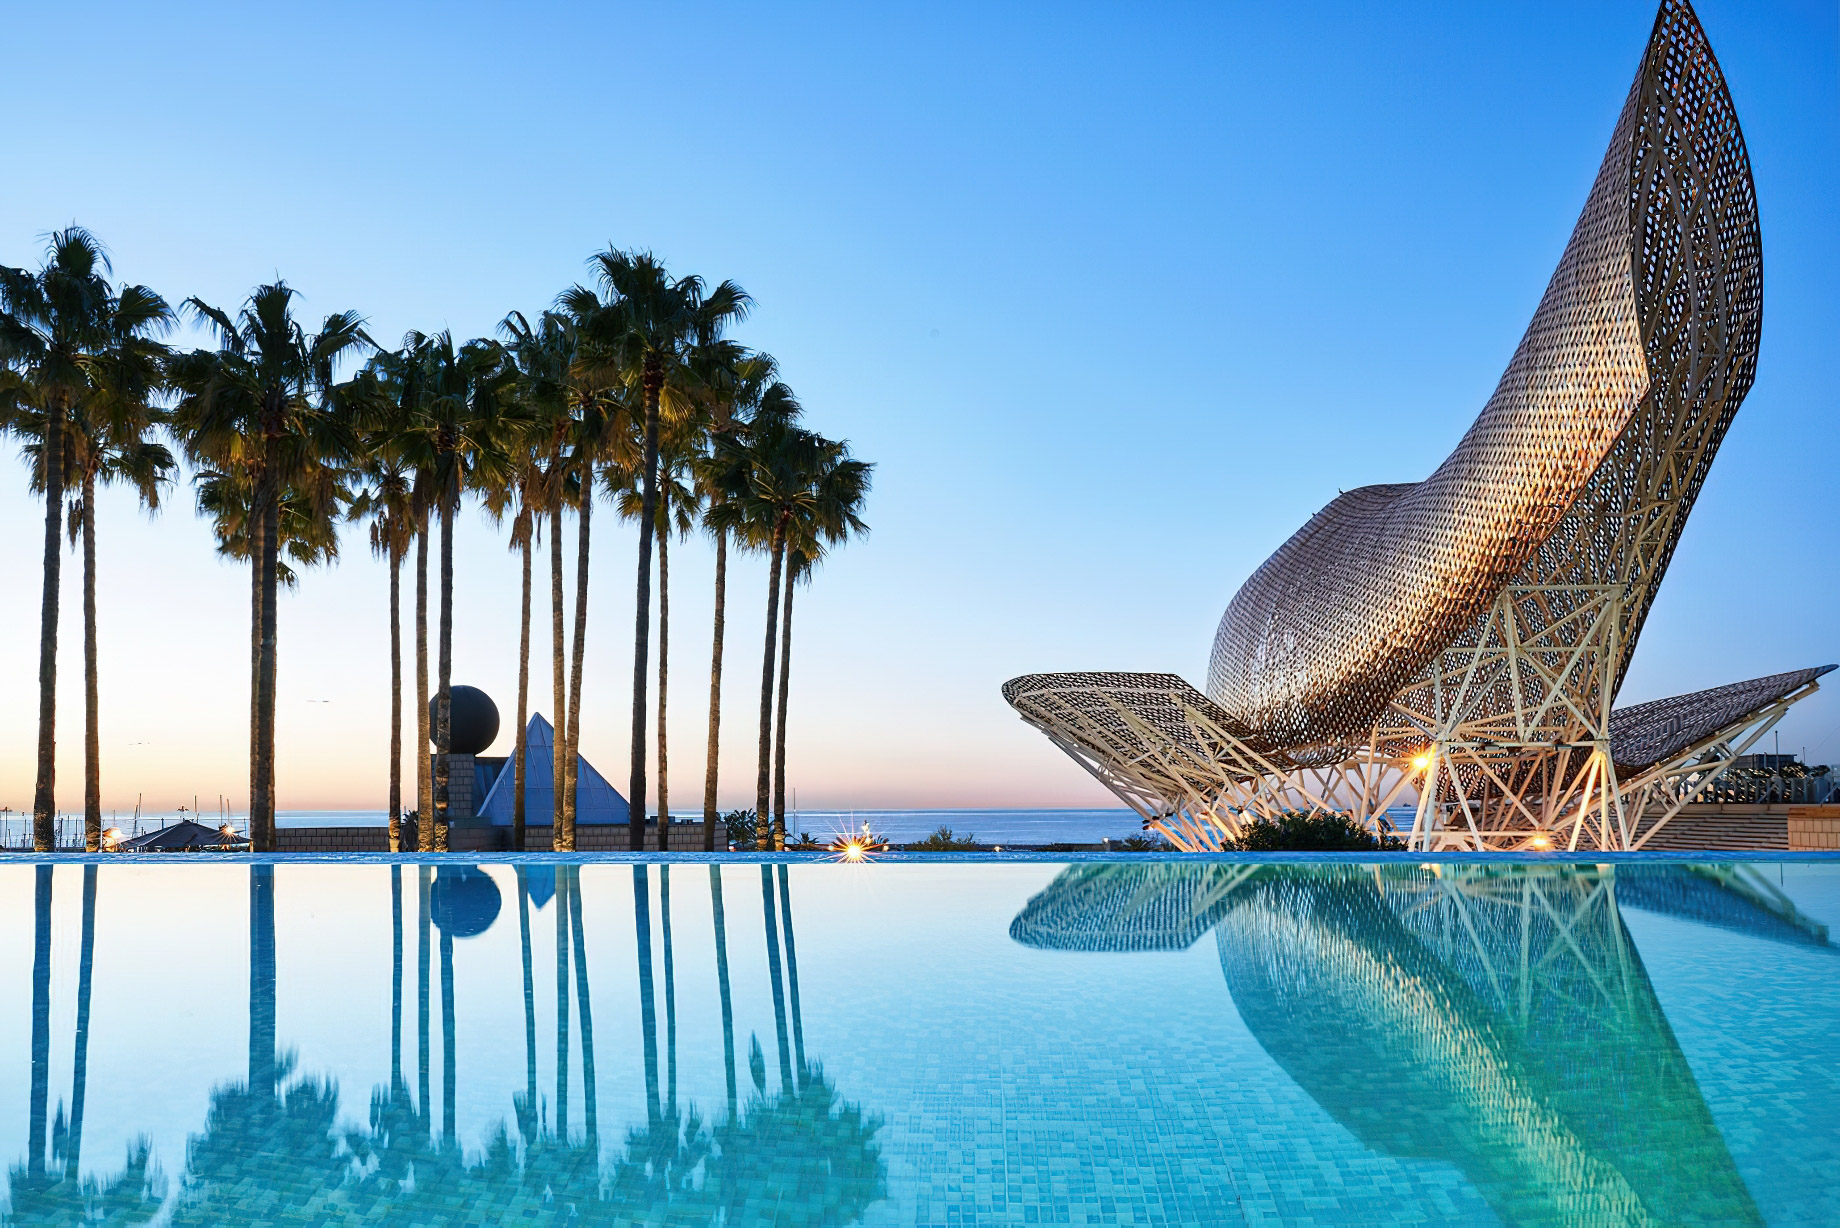 Hotel Arts Barcelona Ritz-Carlton – Barcelona, Spain – Infinity Pool Ocean View